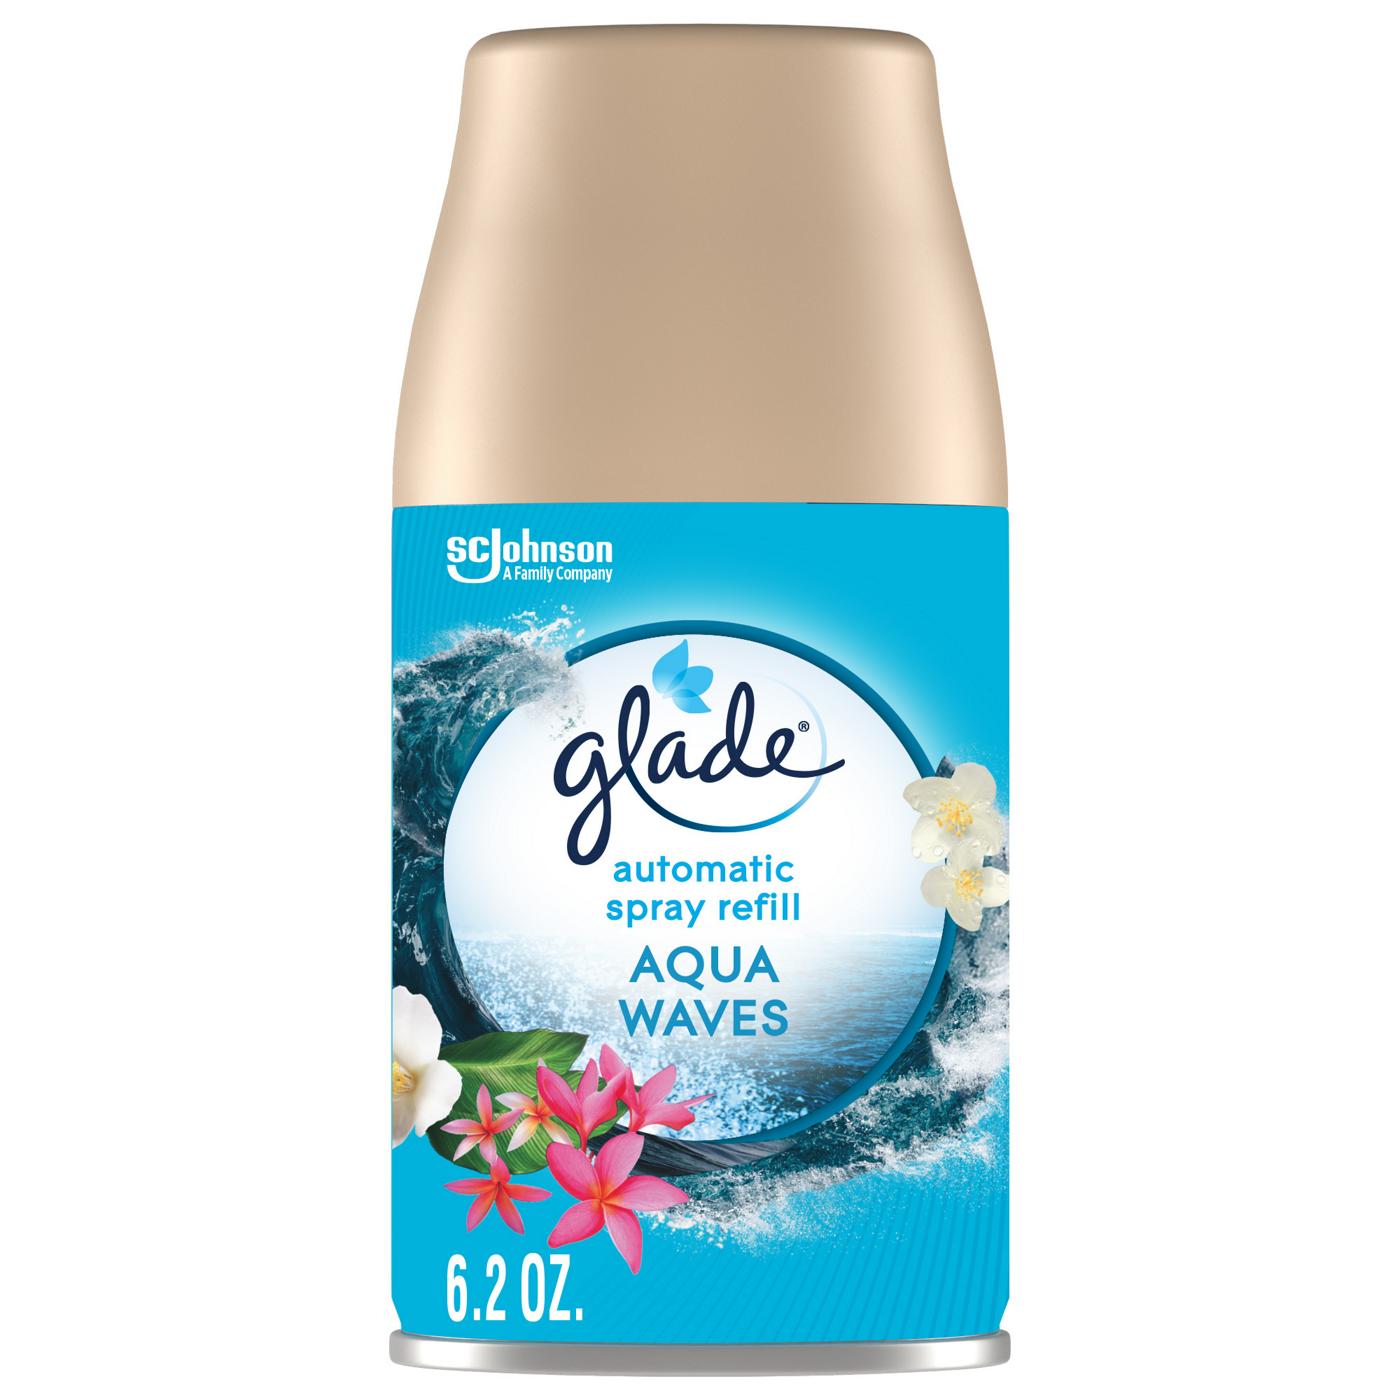 Glade Automatic Spray Refill - Aqua Waves; image 1 of 2